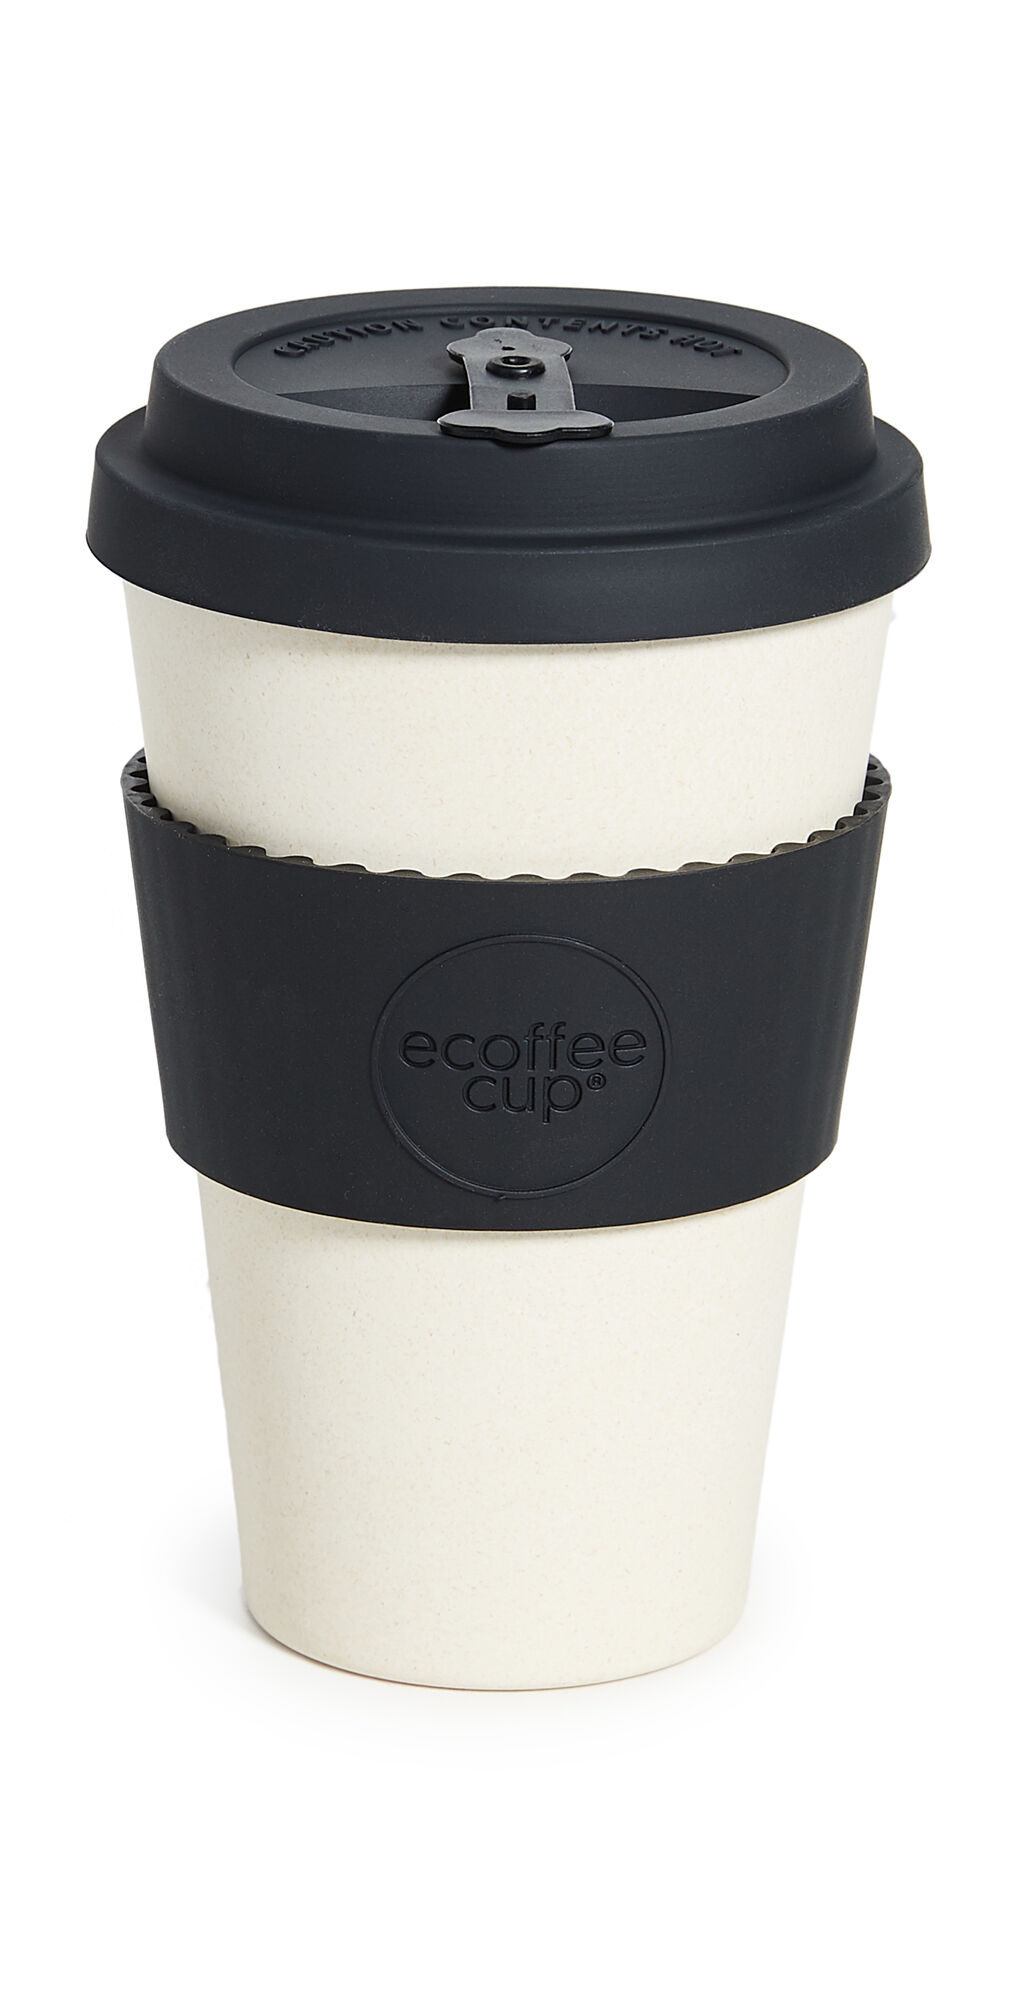 Shopbop Home Shopbop @Home 14oz Reuseable Coffee Cup Black Nature One Size  Black Nature  size:One Size